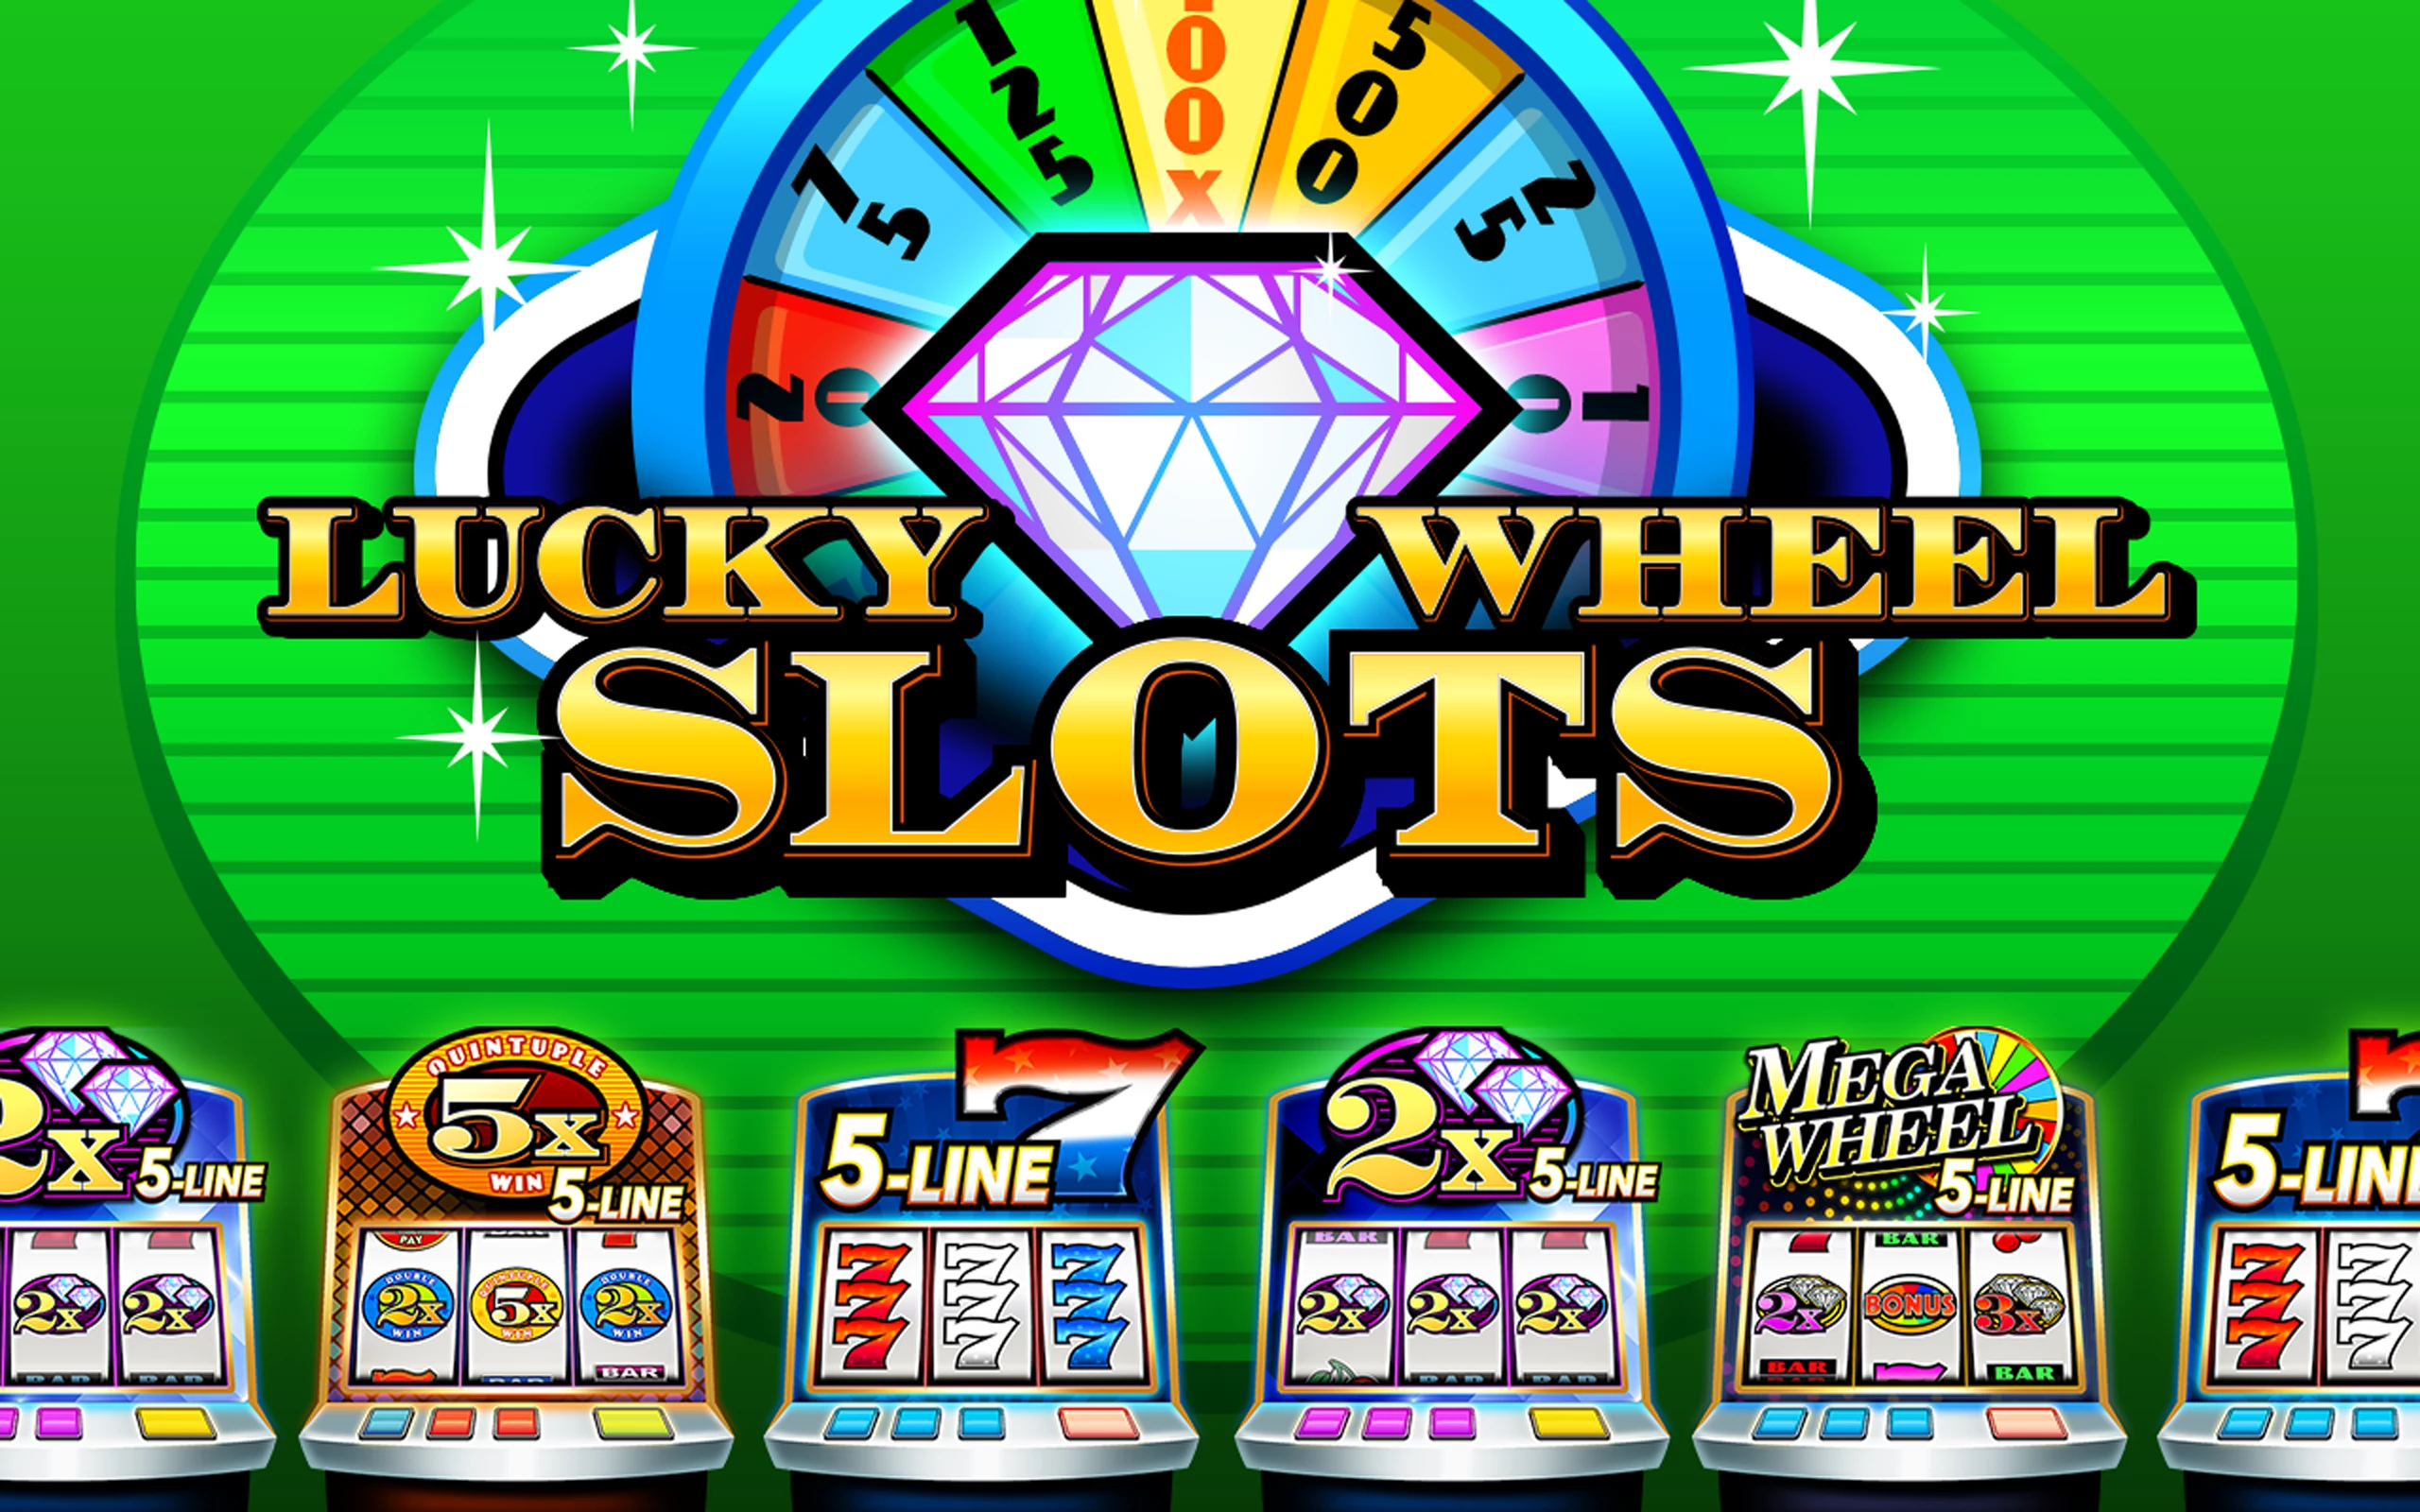 Online Free Slot Games